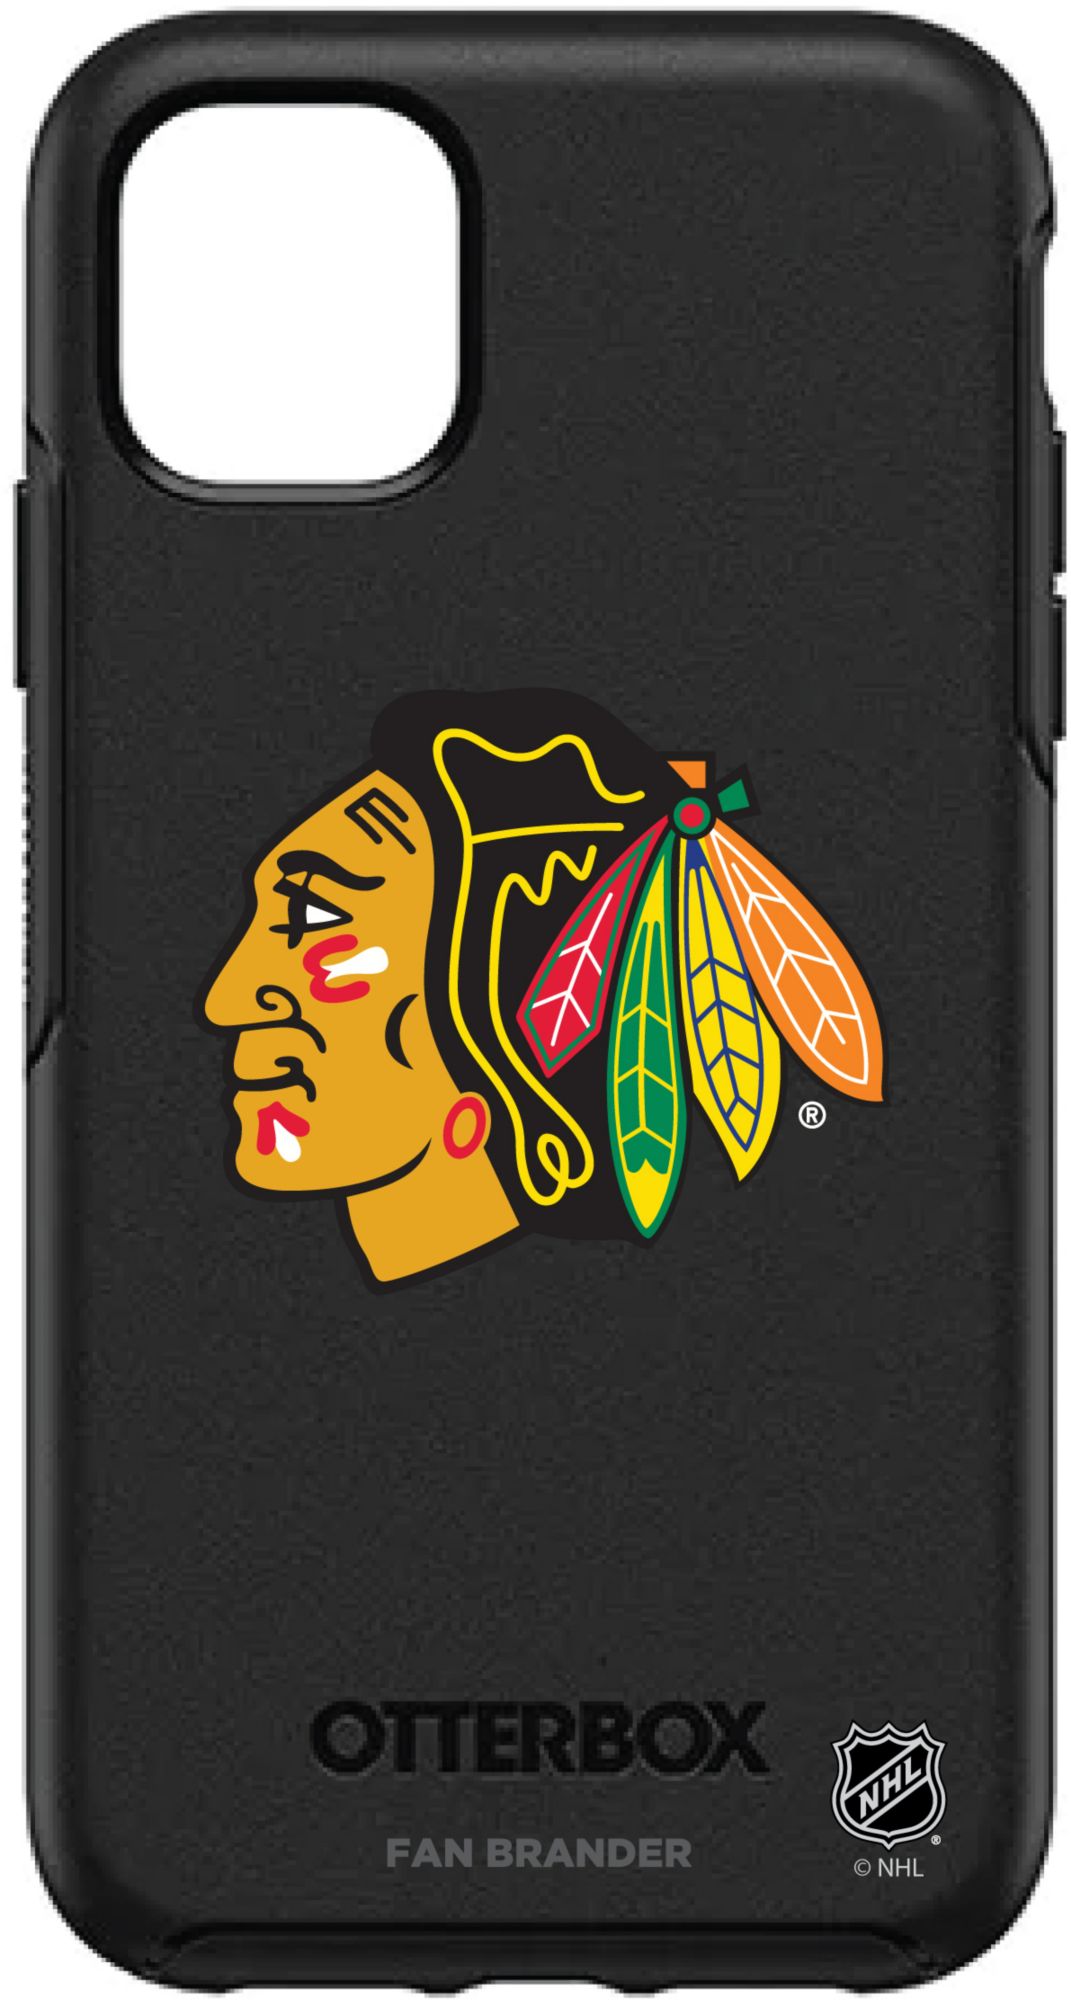 Otterbox Chicago Blackhawks iPhone 11 Pro Max Symmetry Case